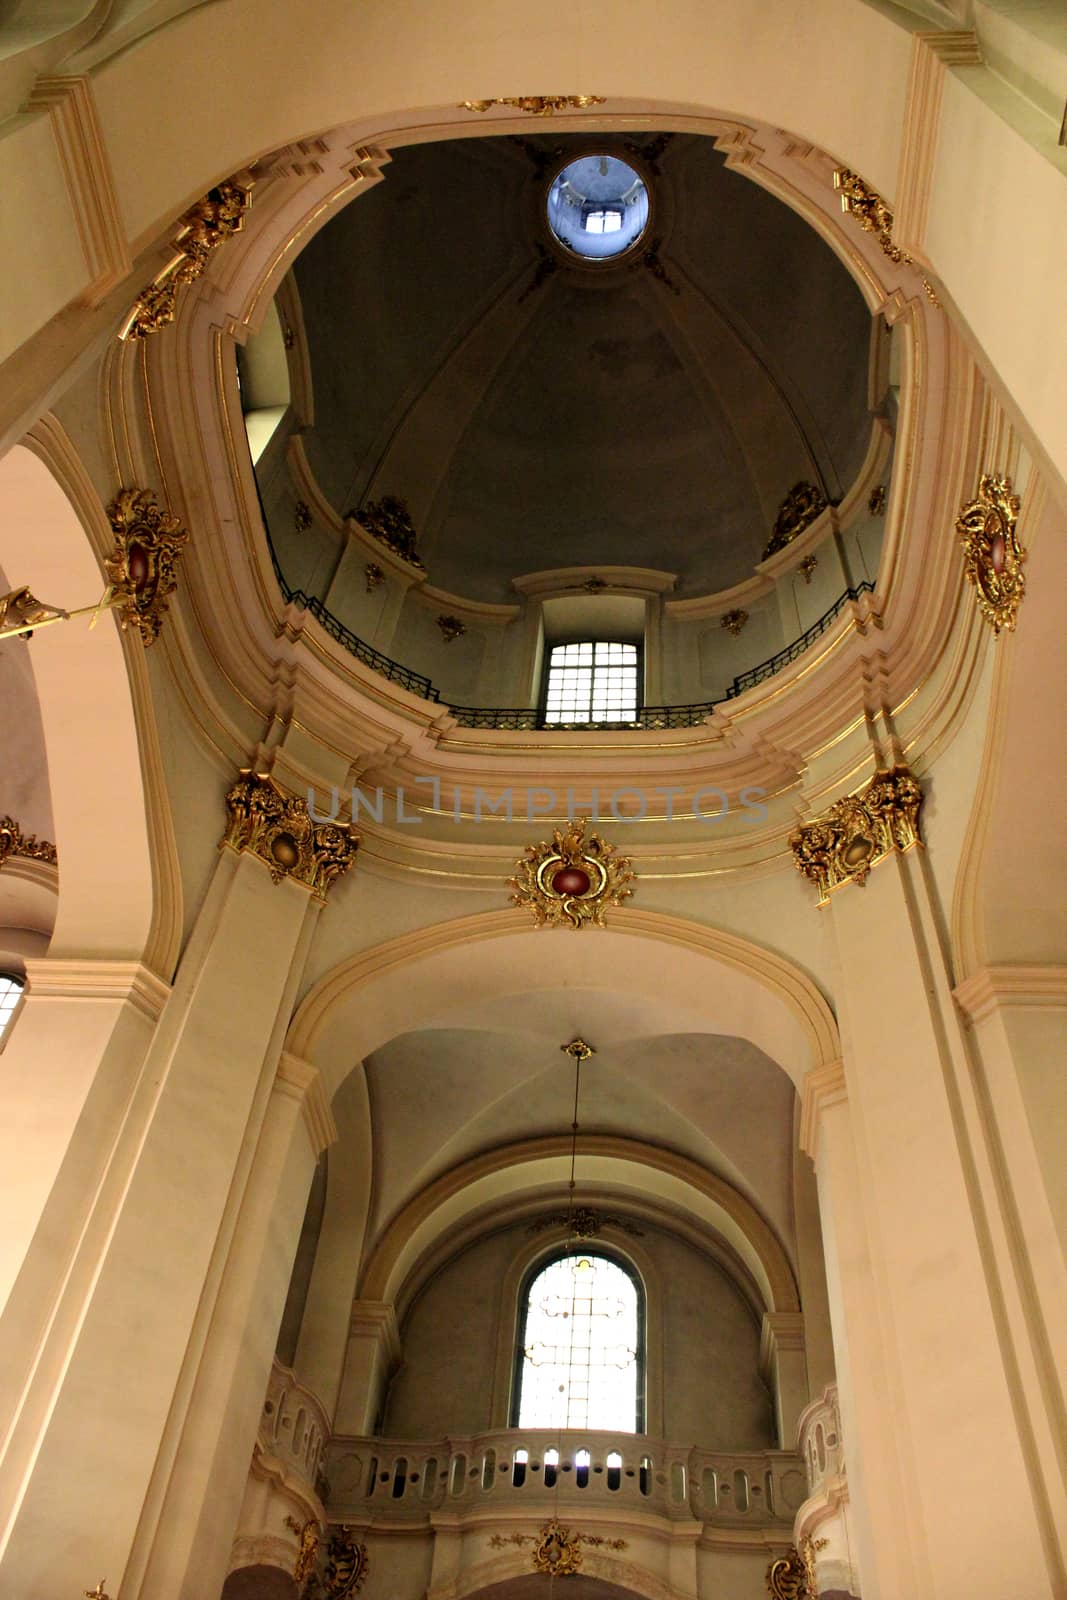 arch in the beautiful Catholic church by alexmak